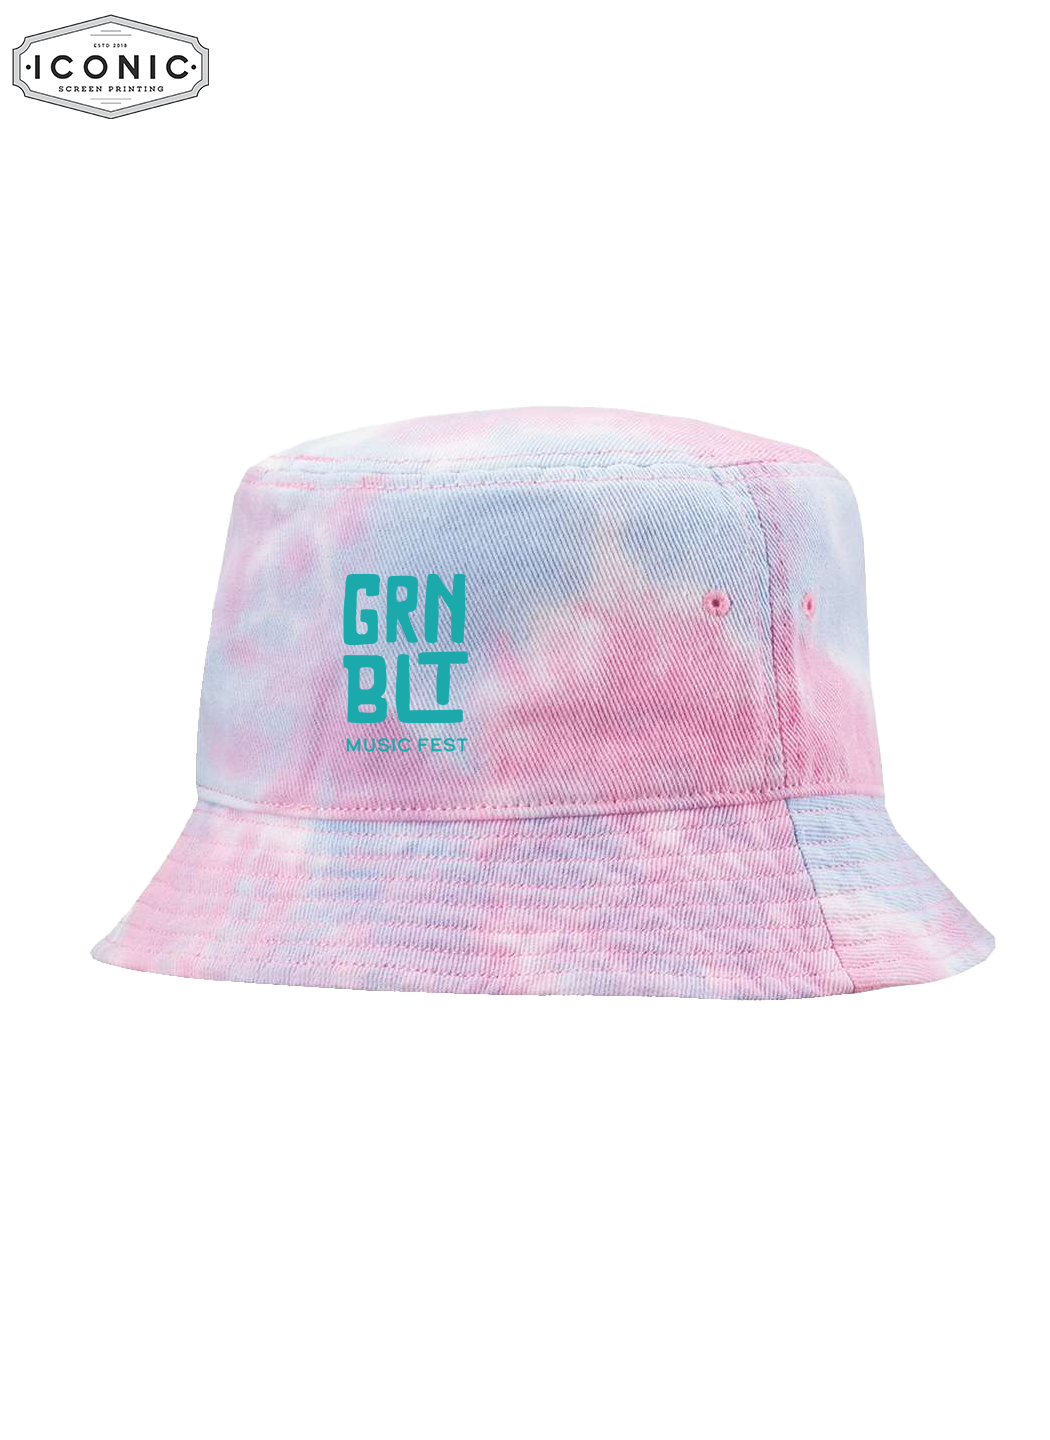 Greenbelt Music Festival - Tie-Dyed Bucket Cap